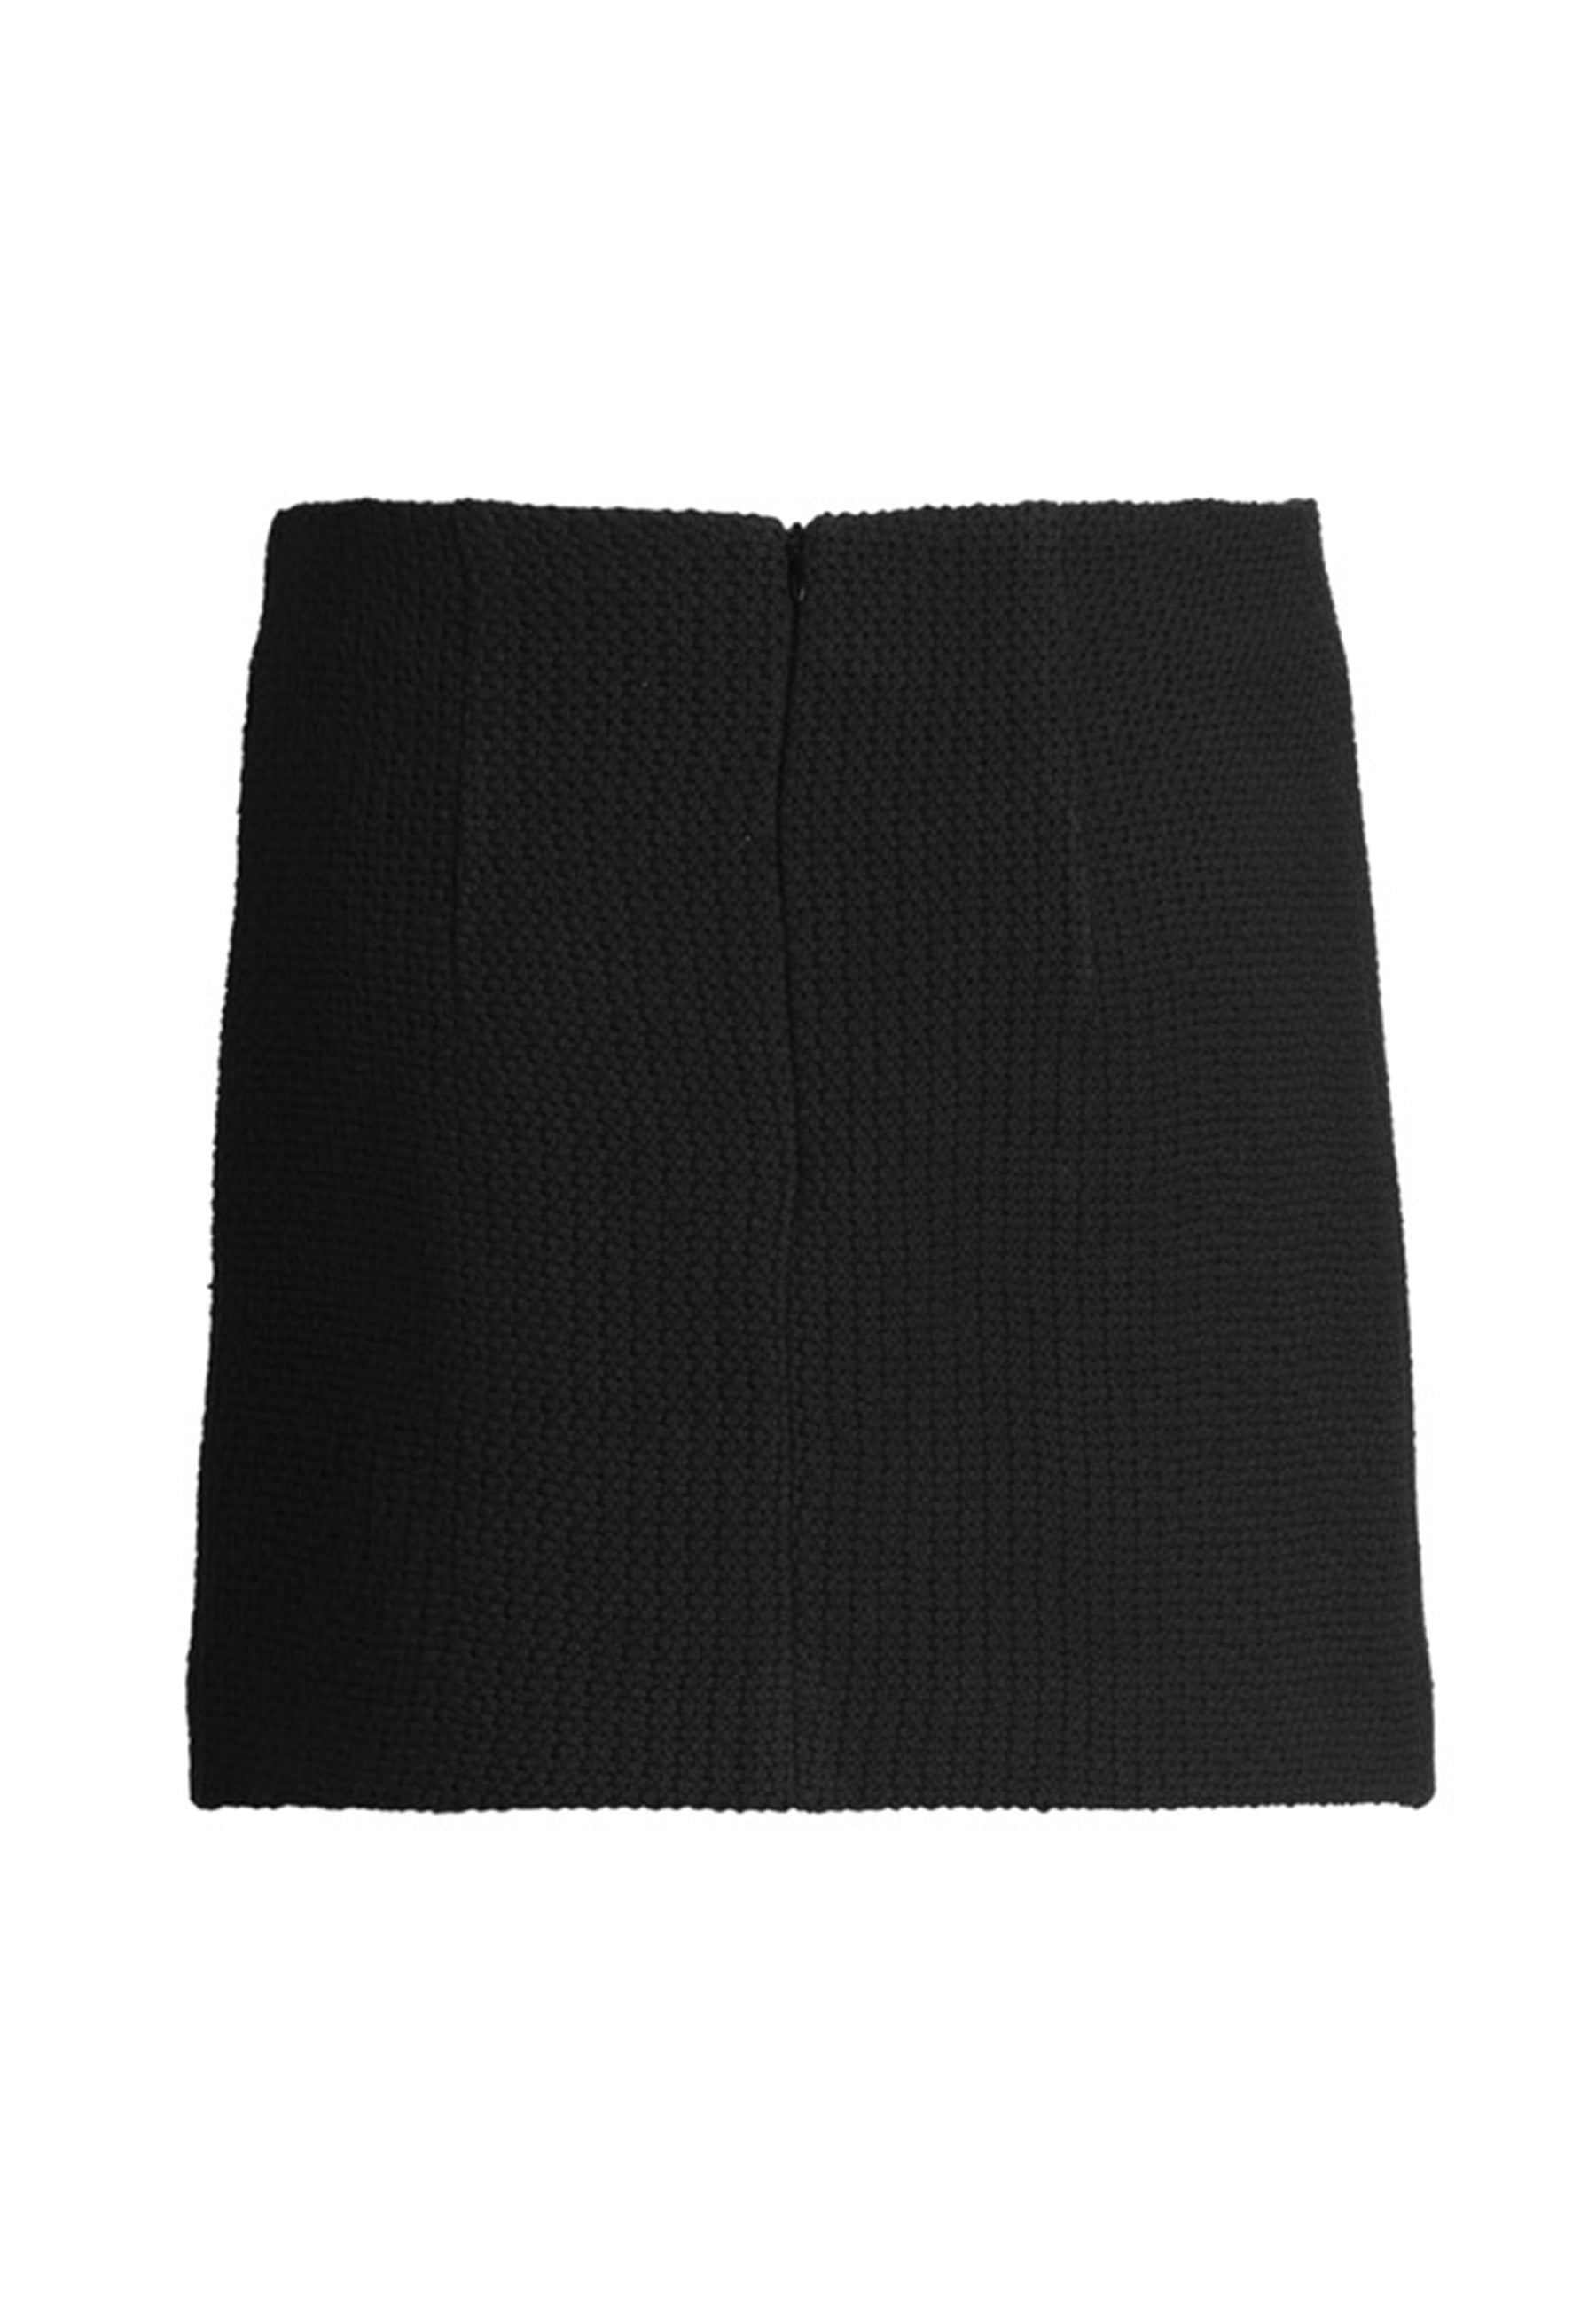 Women's black cotton mini skirt with slit